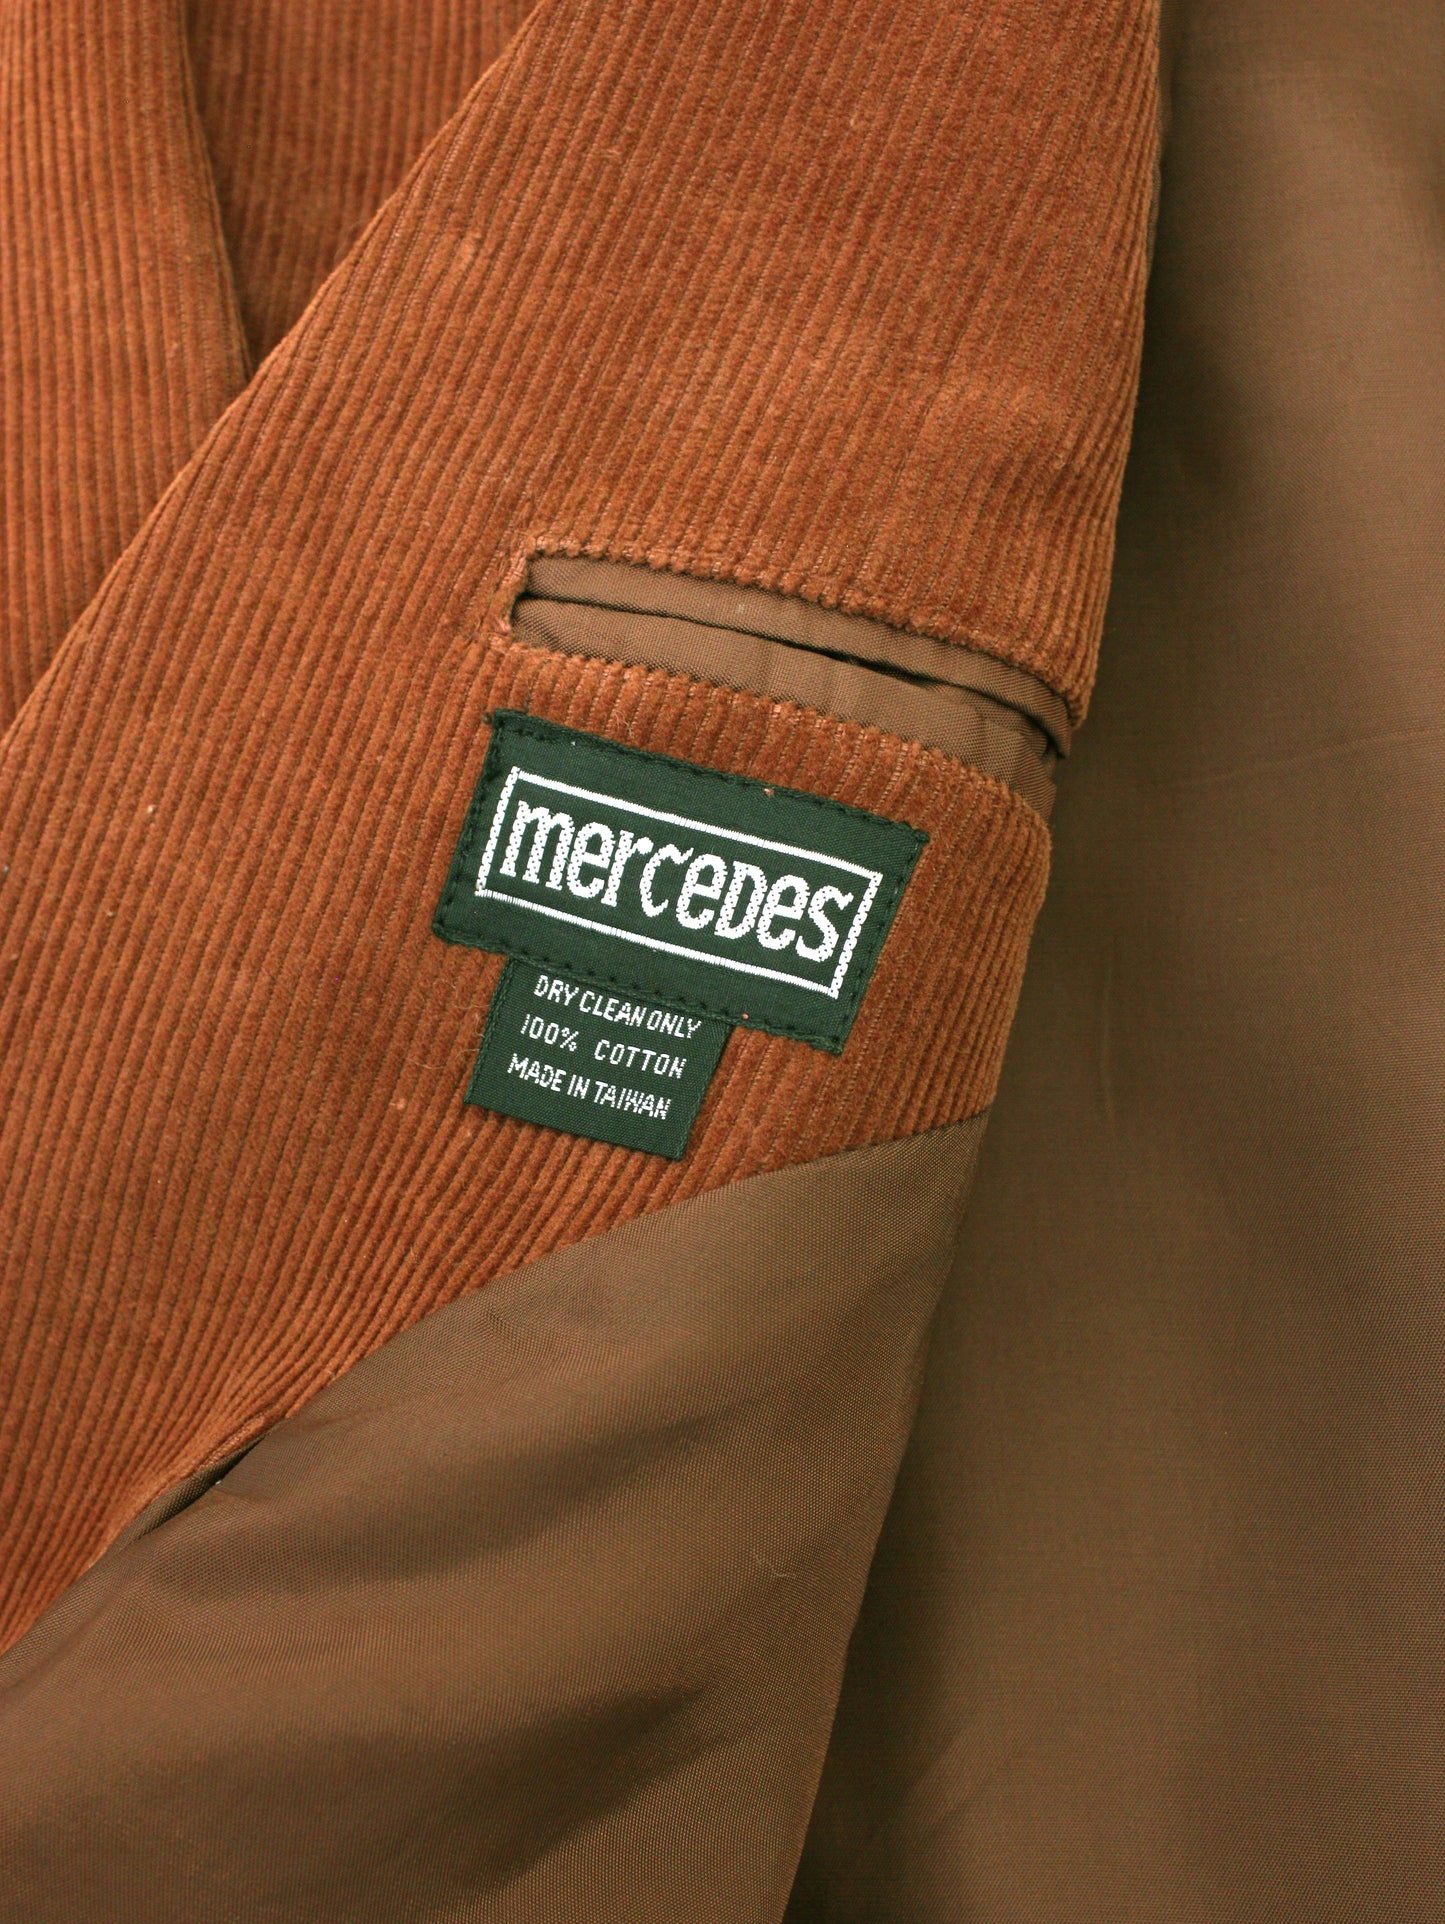 3 Piece 1970s Brown Corduroy Suit by Mercedes